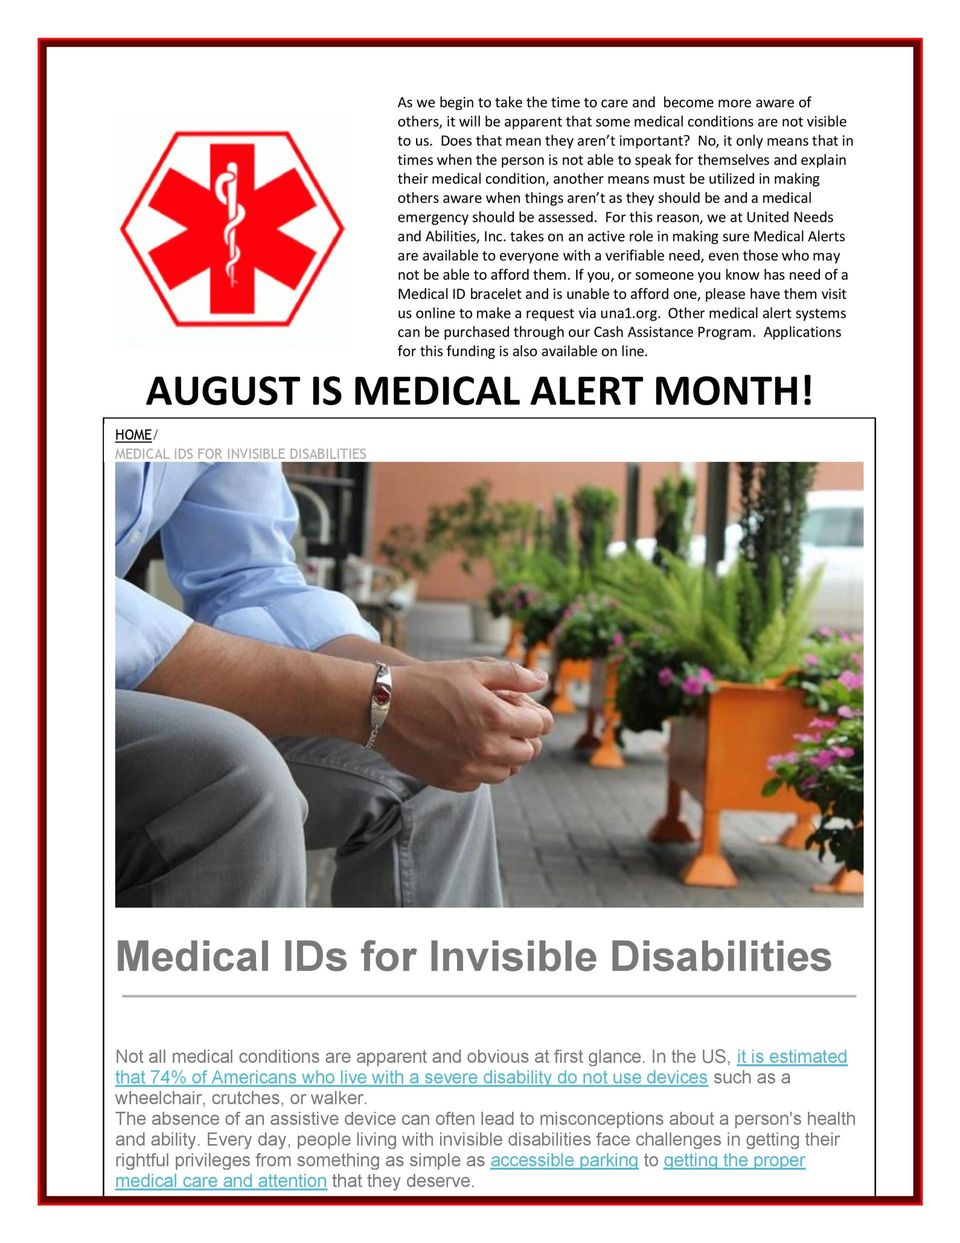 August is Medical Alert Month graphic. Information below for screenreaders.